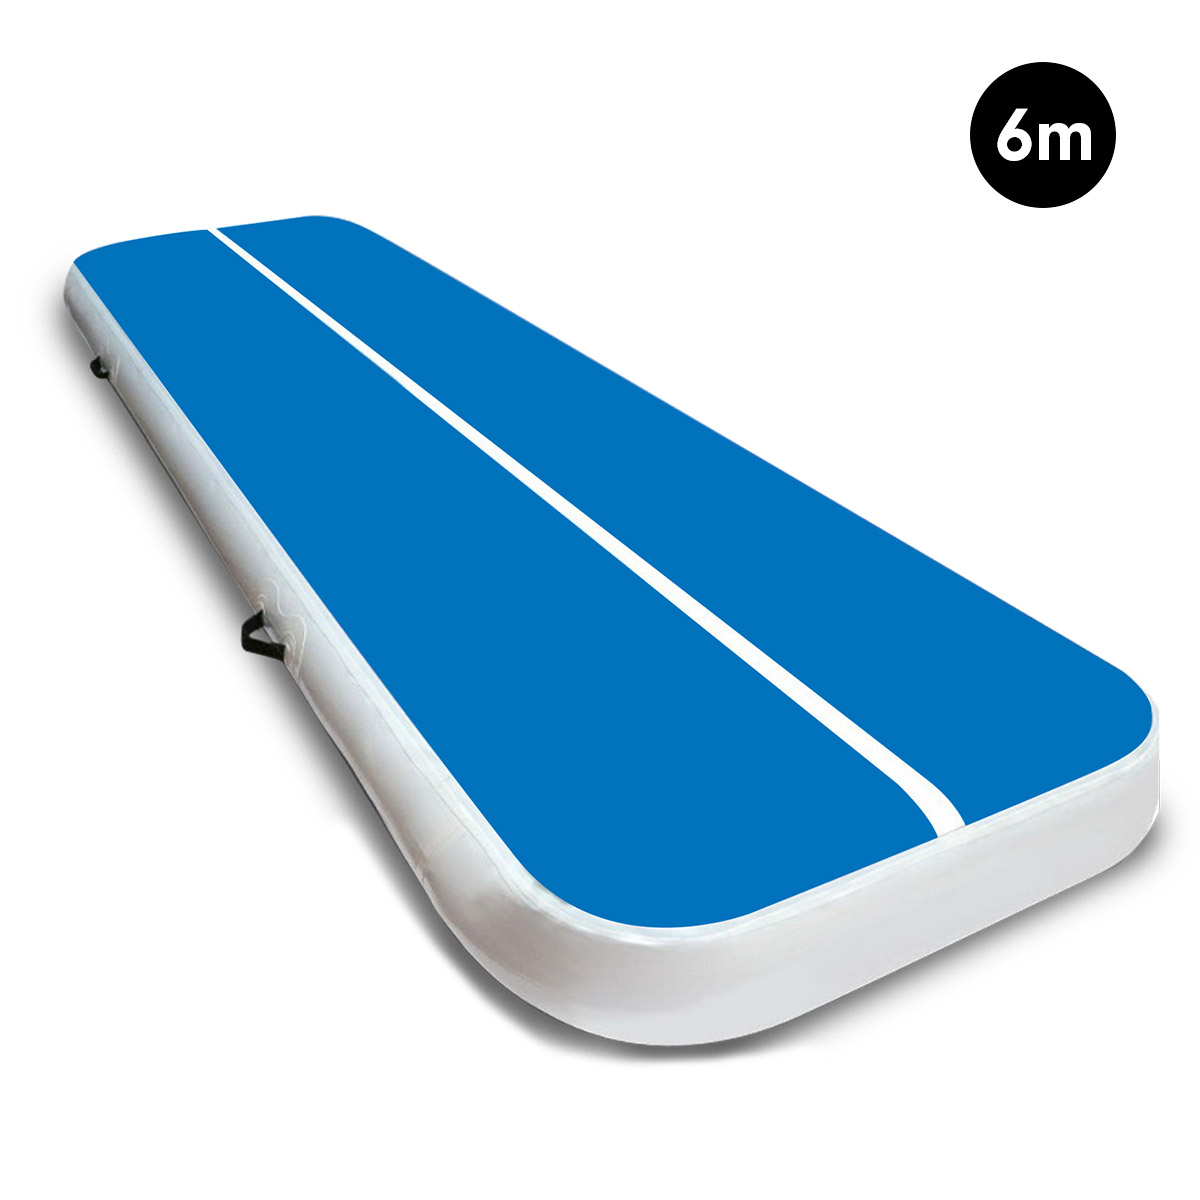 6m x 2m Air Track Tumbling Mat Gymnastics Exercise Blue White